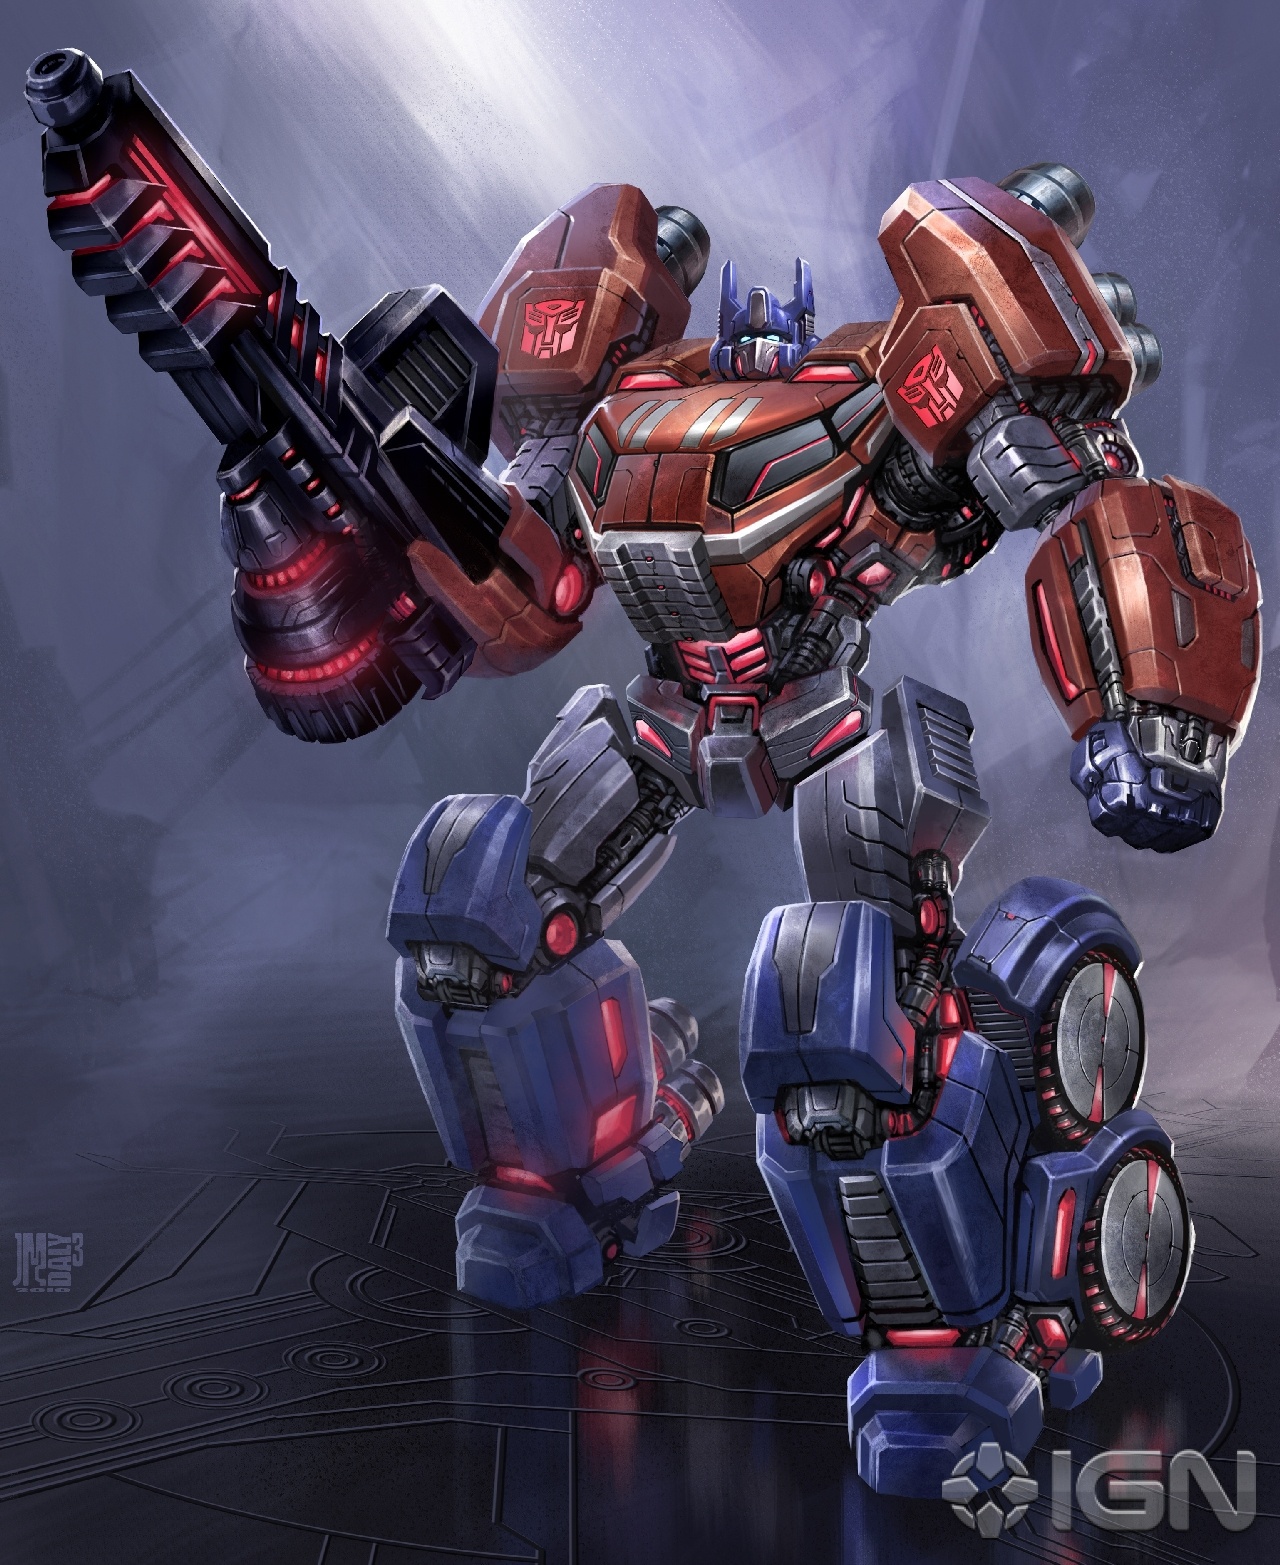 Transformers Prime - IGN